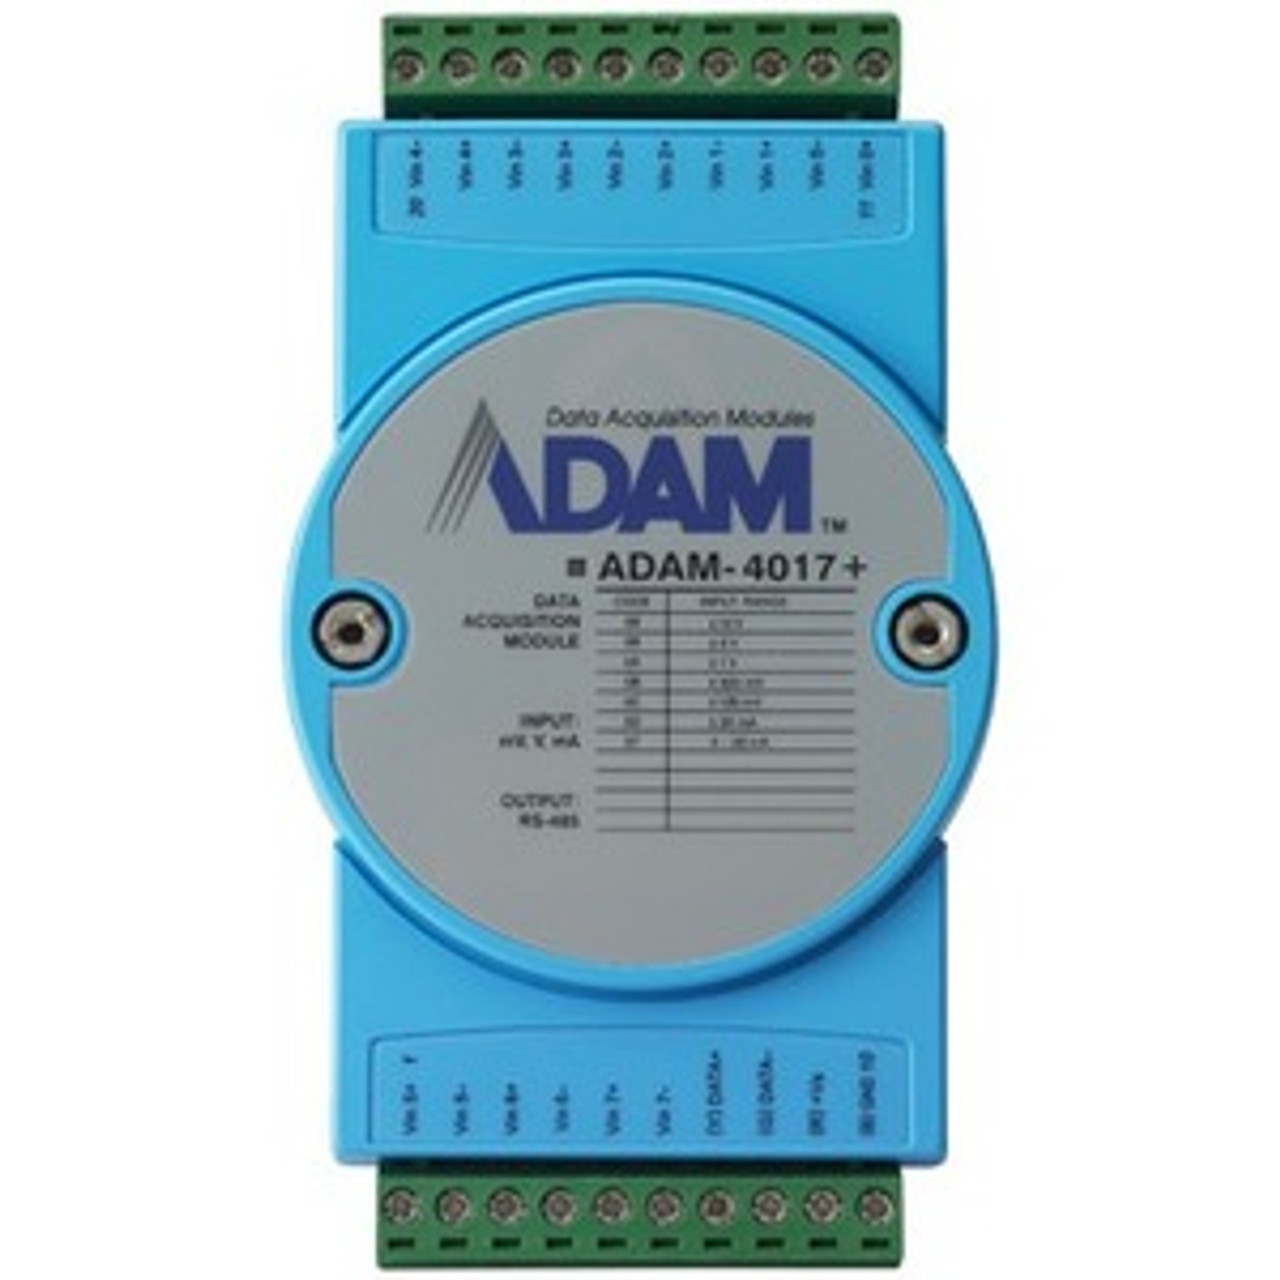 ADAM-4017+-CE Advantech 8-Channel Analog Input Module with